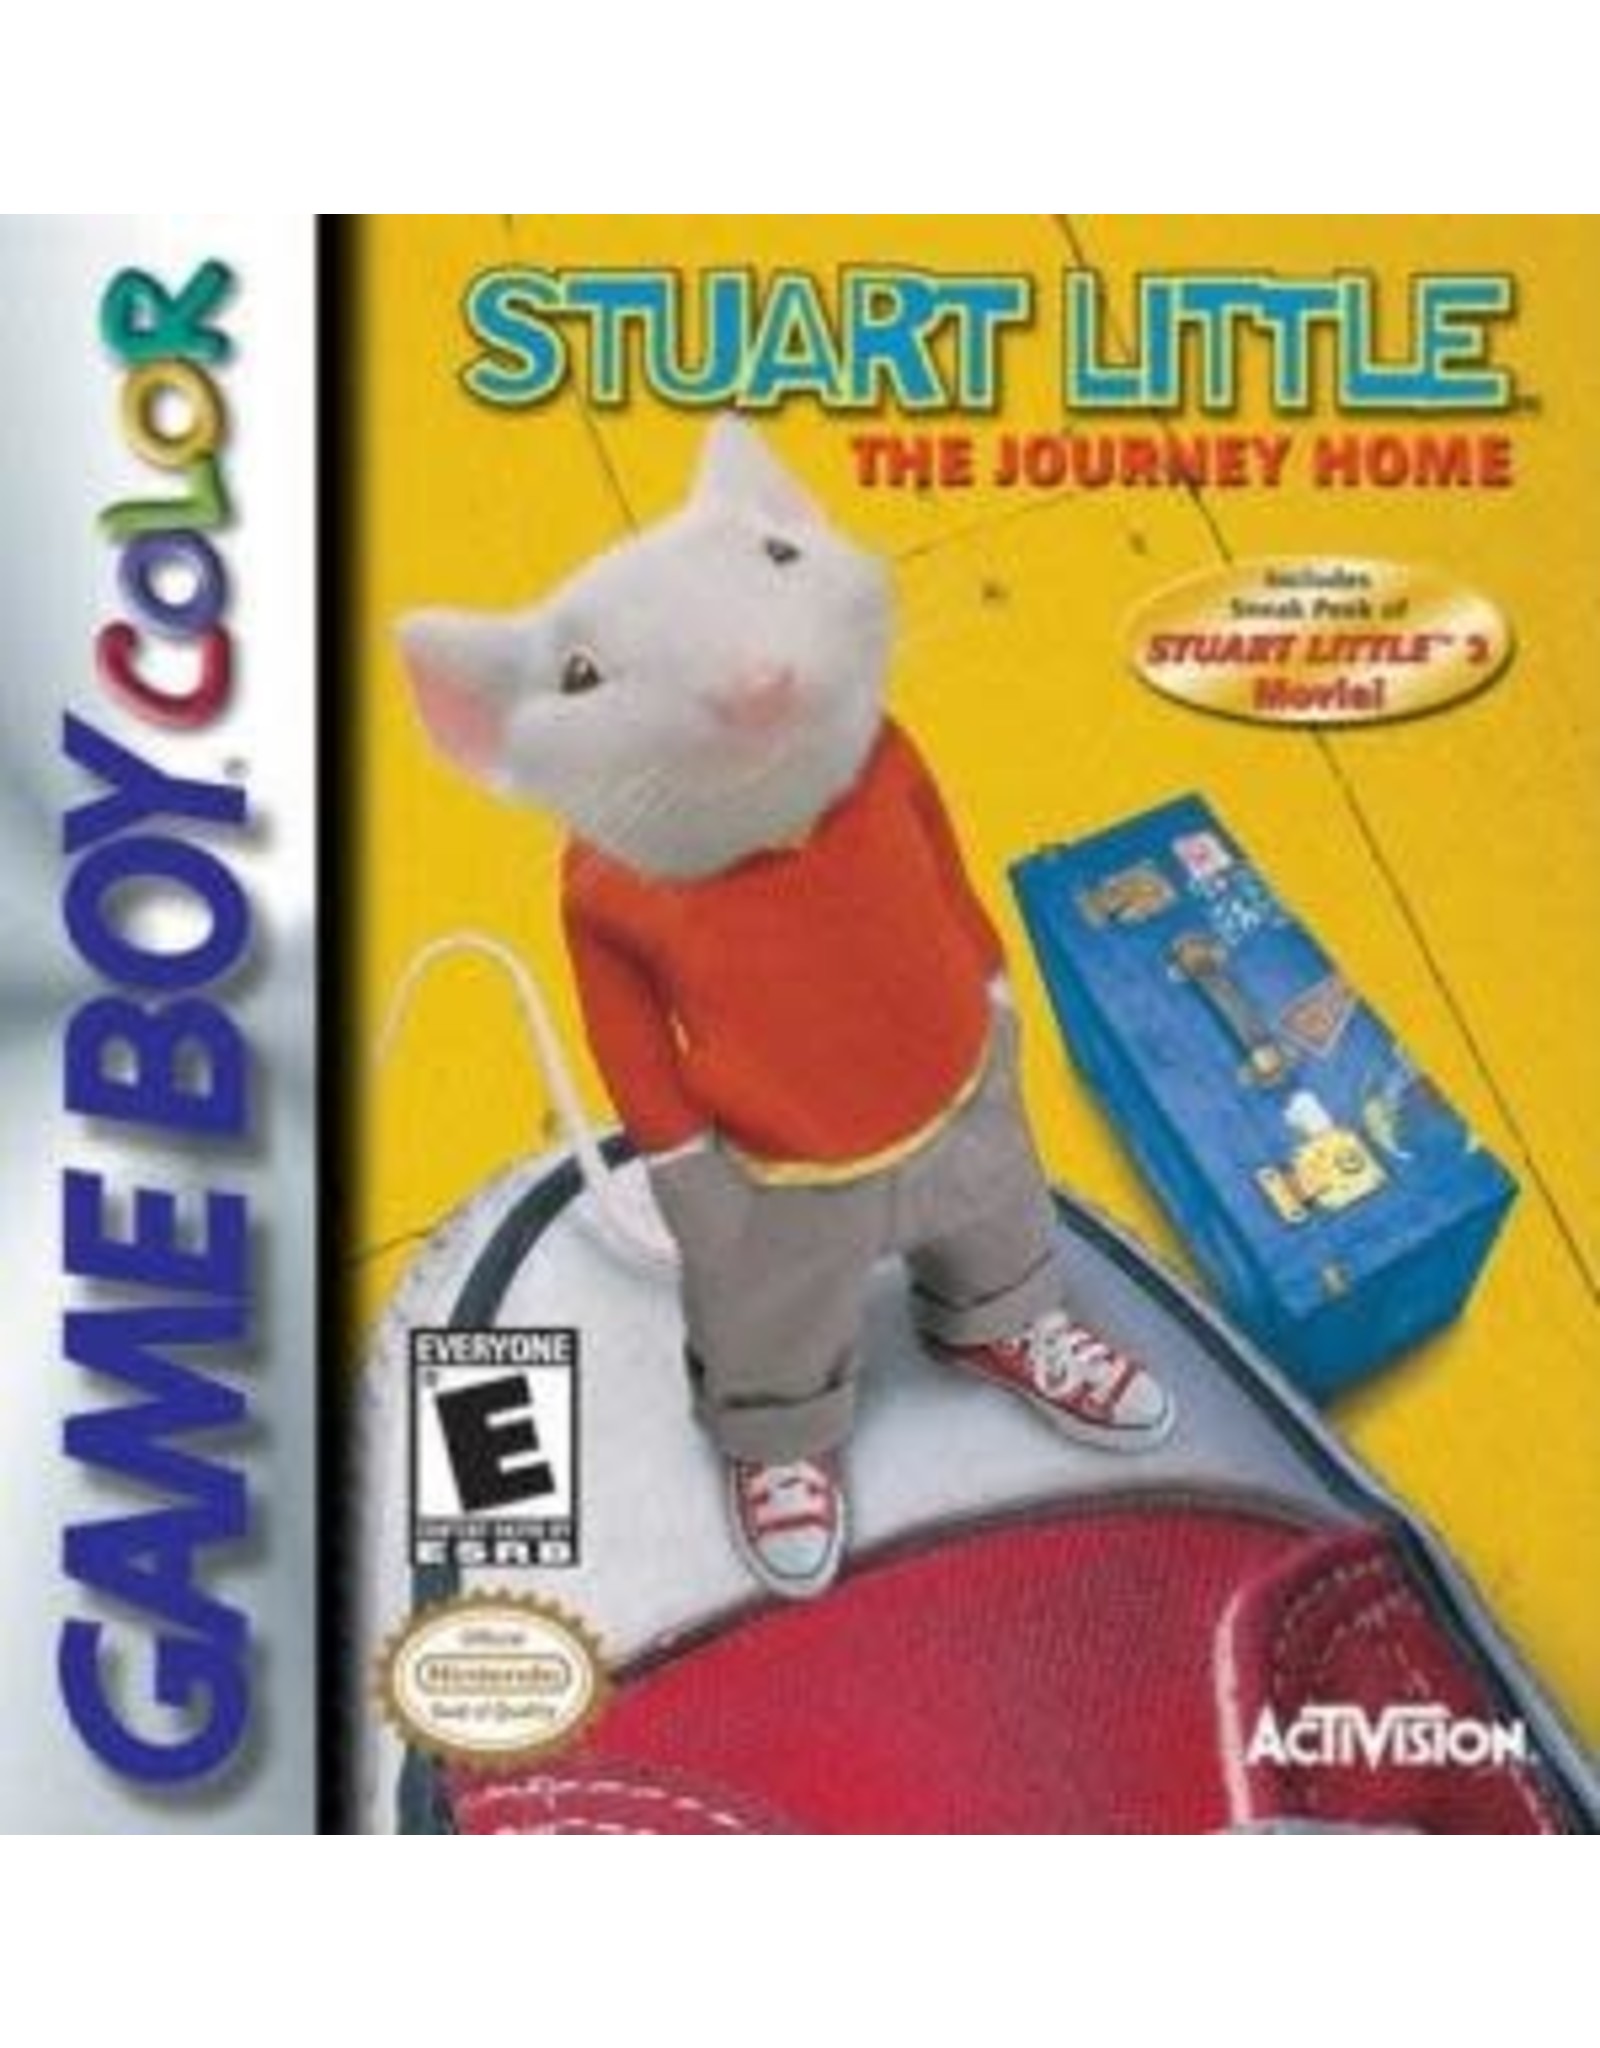 Game Boy Color Stuart Little Journey Home (Cart Only)